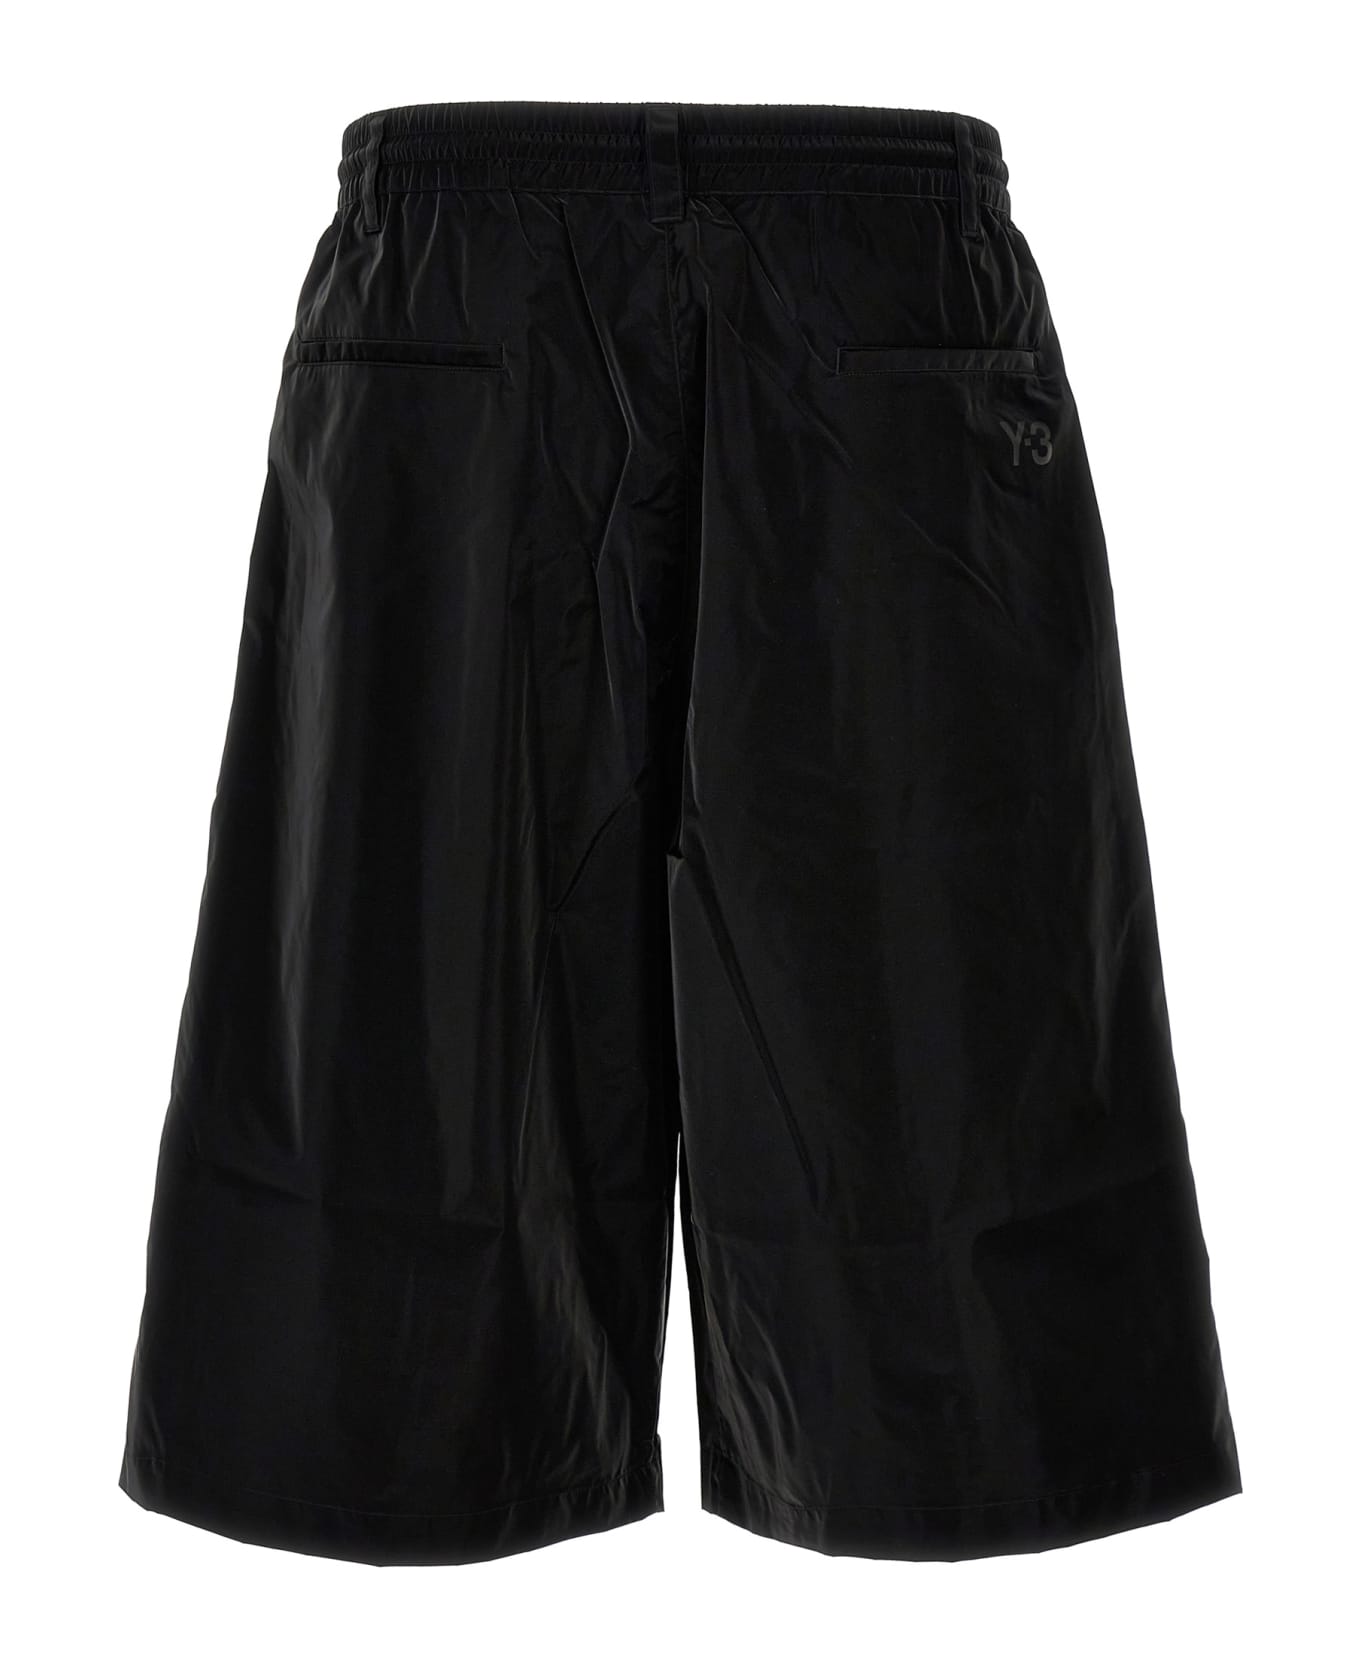 Y-3 Bermuda Shorts With Side Bands - Black